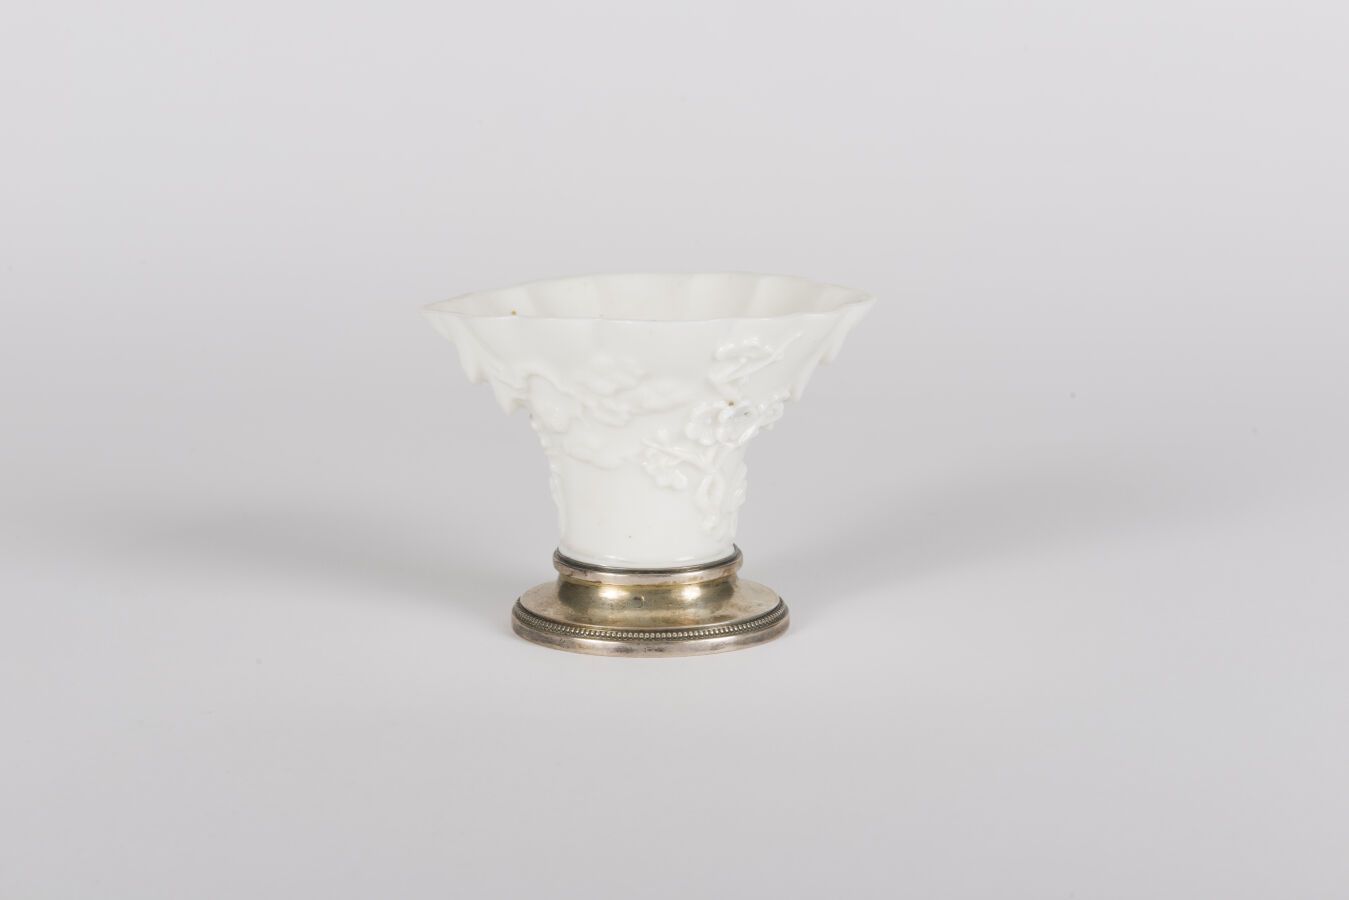 Null 中国白瓷酹酒杯 
中国，康熙时期（1662-1722年）
犀牛角雕花碗，浅浮雕梅花装饰，银装，有Minerva标记
H.7,9厘米